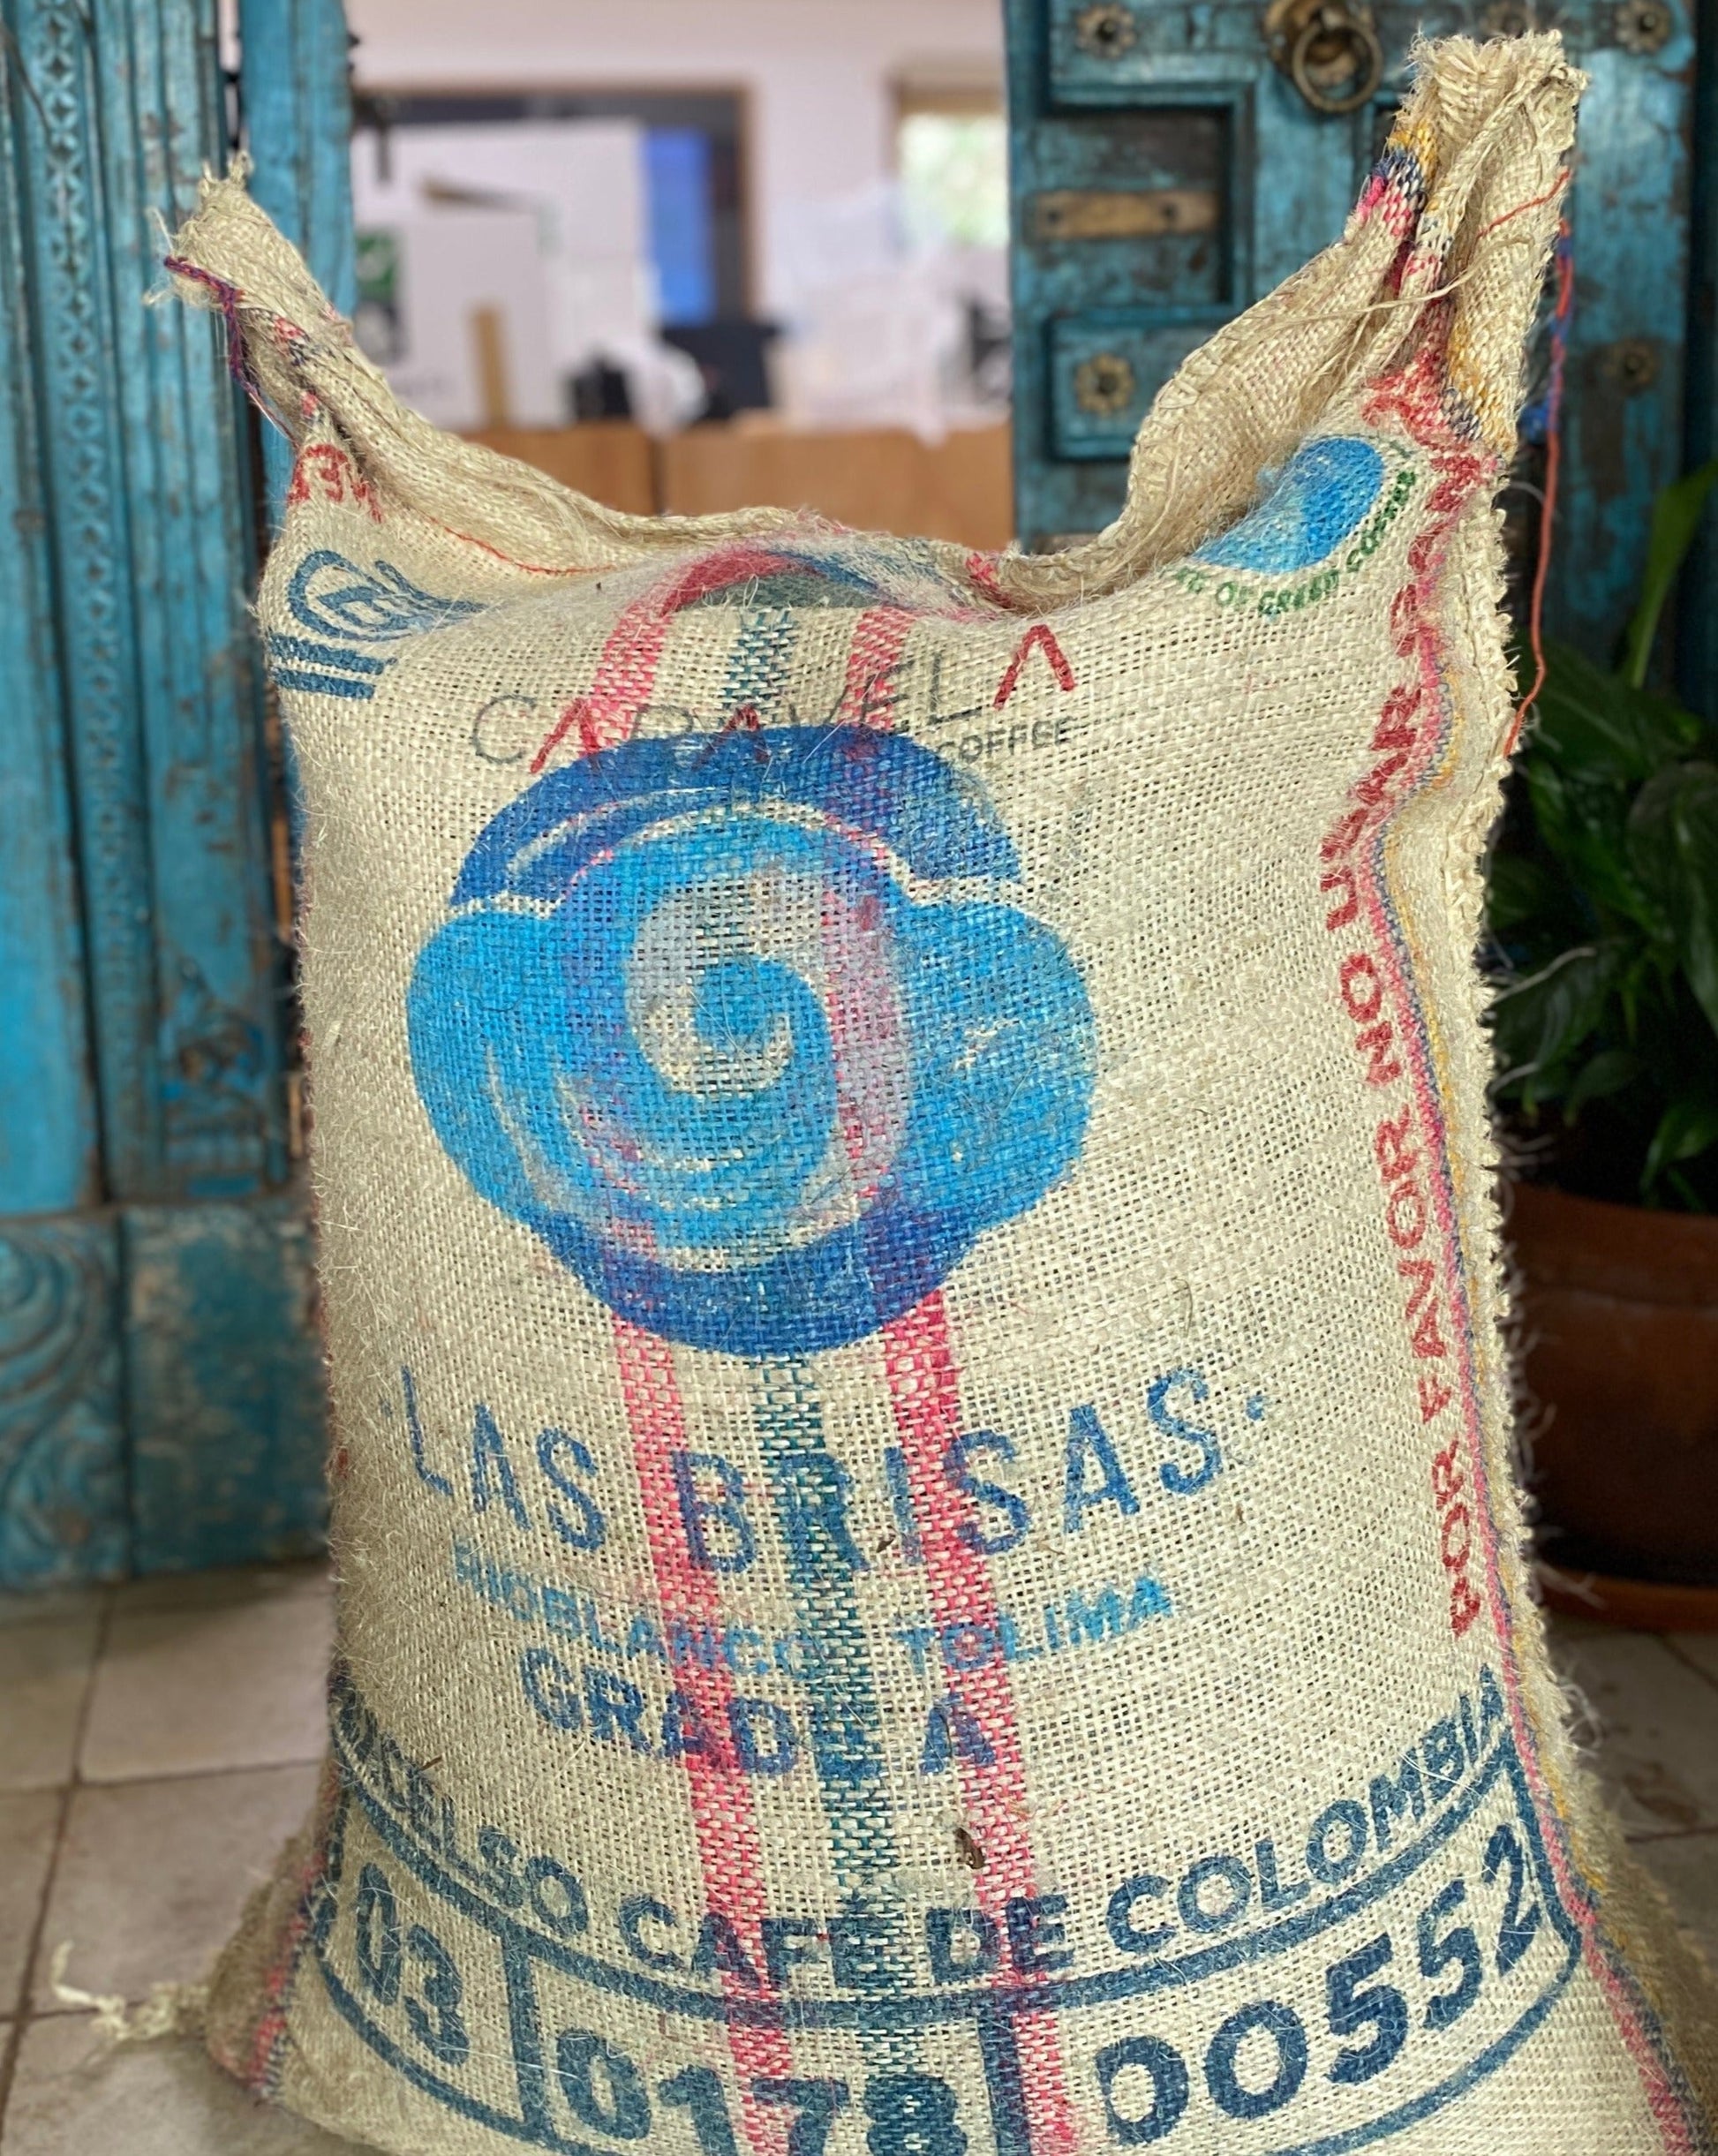 Arabica Las Brisas Colombian Coffee freshly roasted